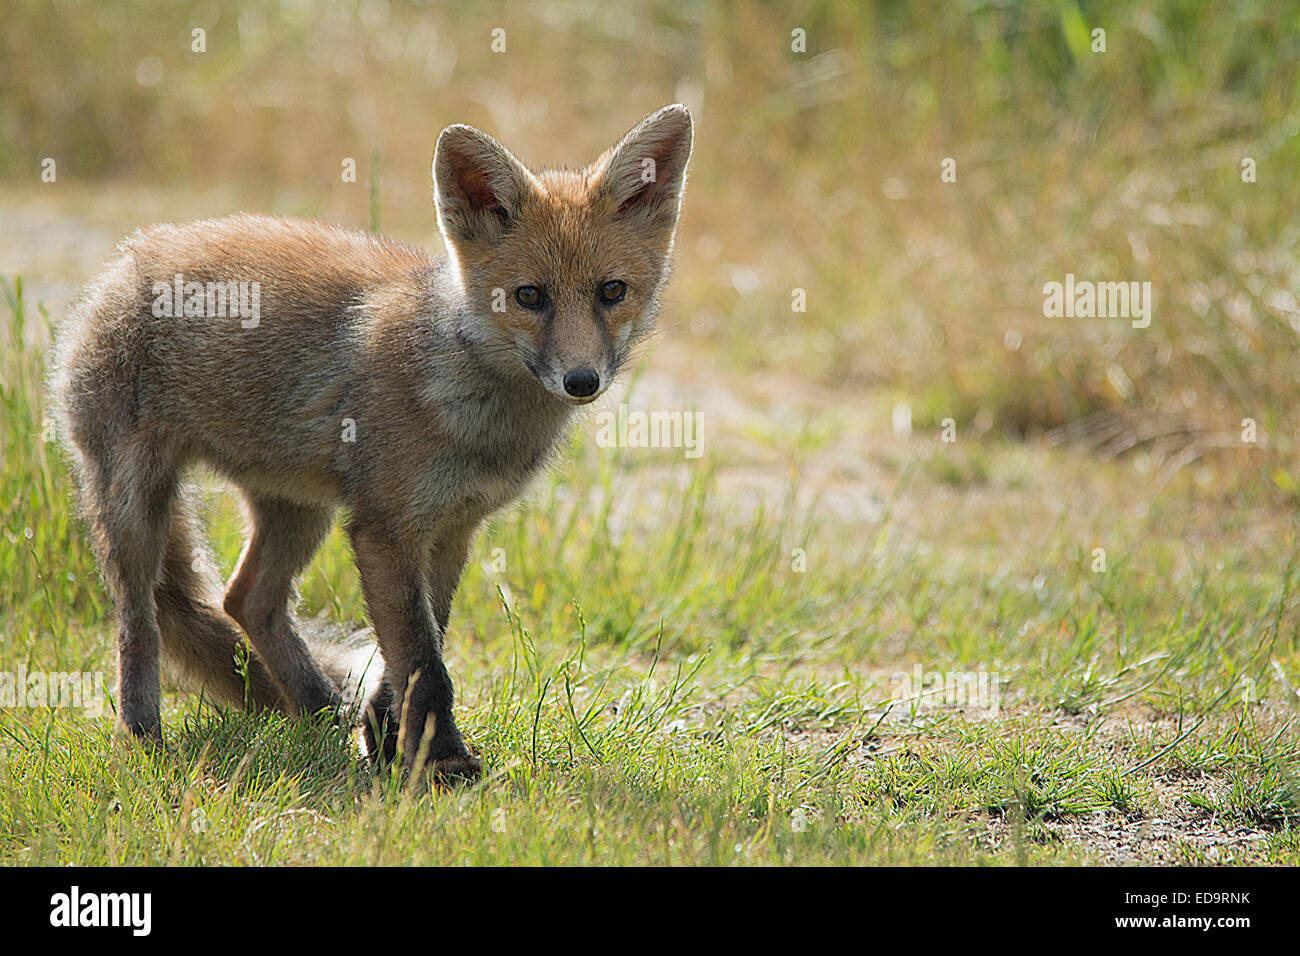 Fox cub standing on grass Stock Photo